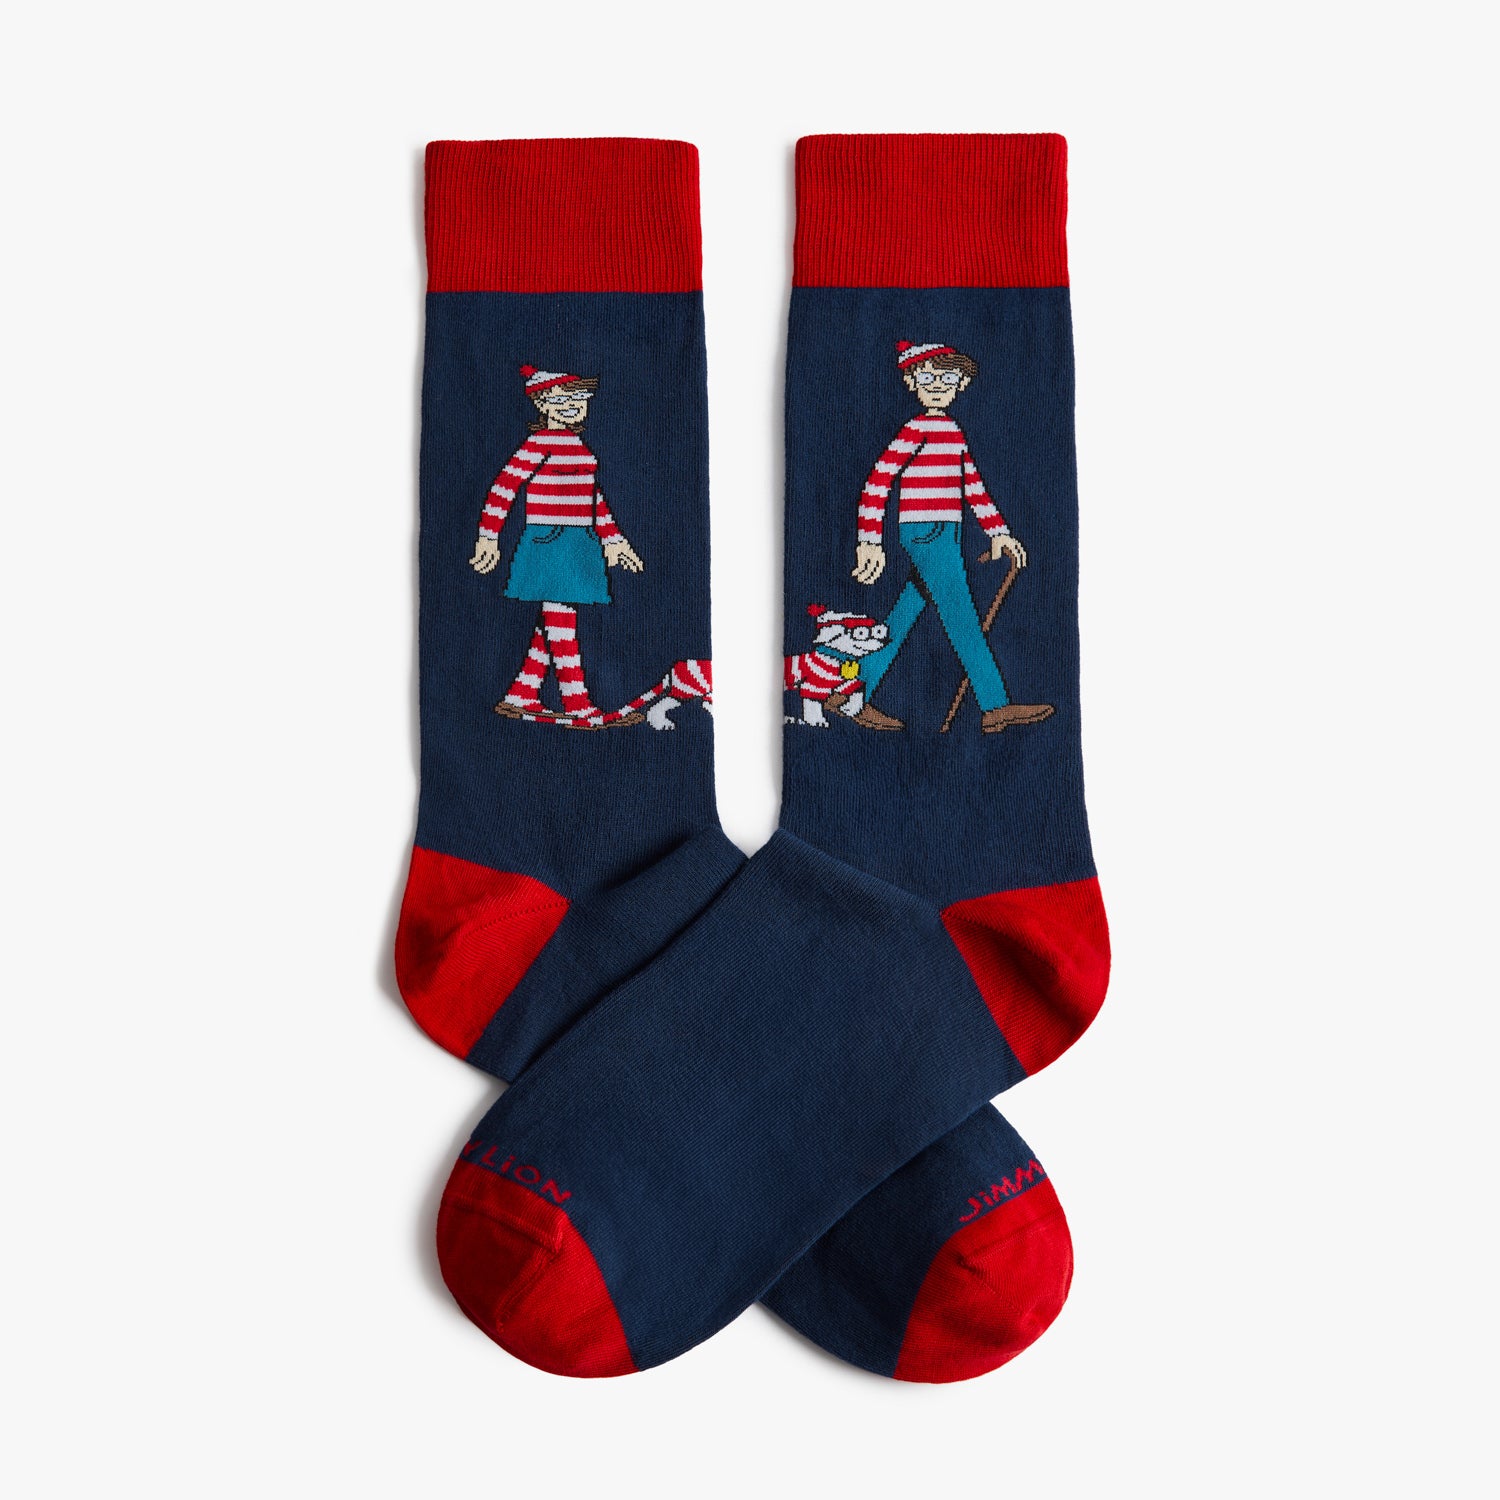 Waldo Red & White Striped Socks